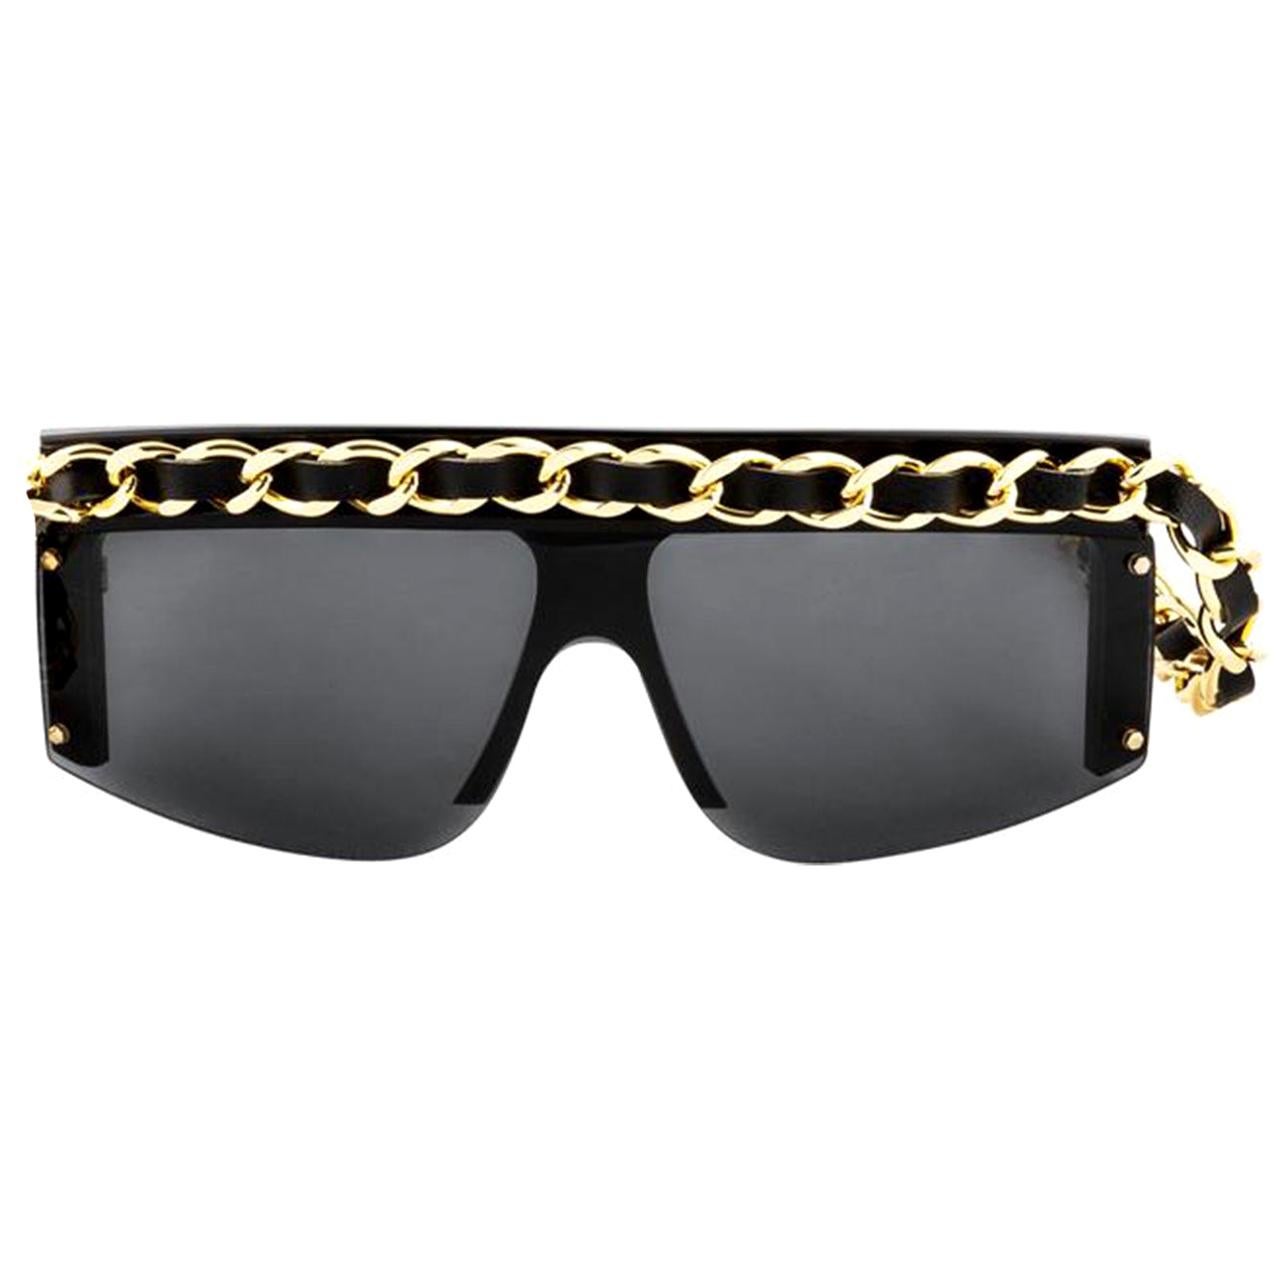 gold chanel eyeglass chain